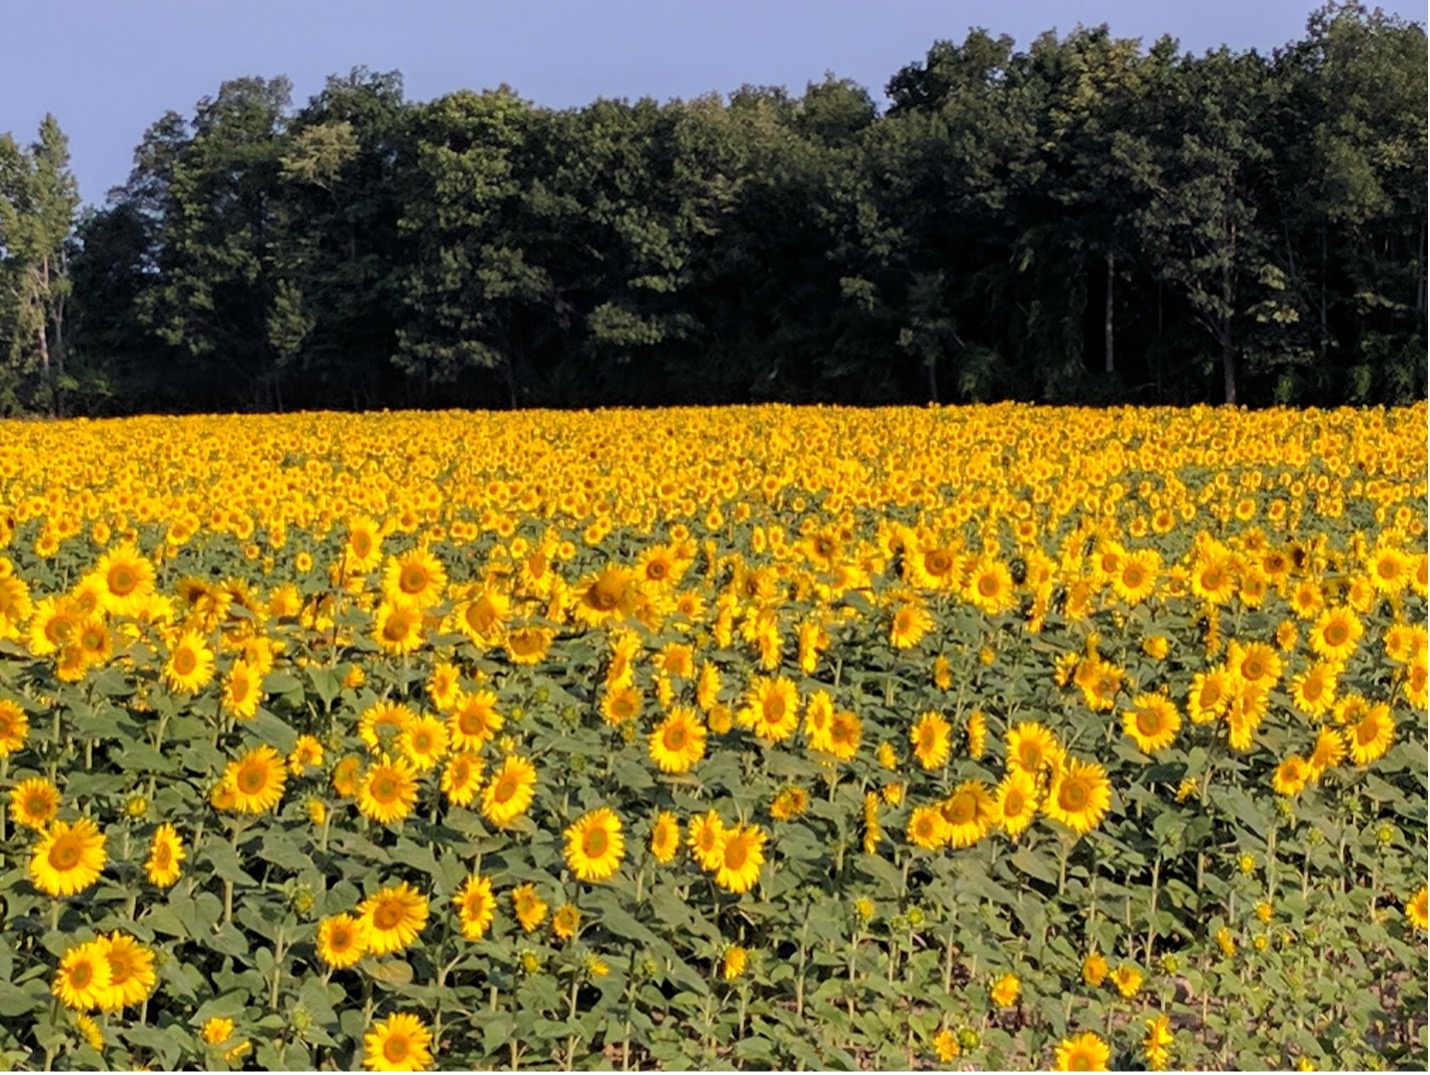 A field of Sunflowers by Karyn Bischoff